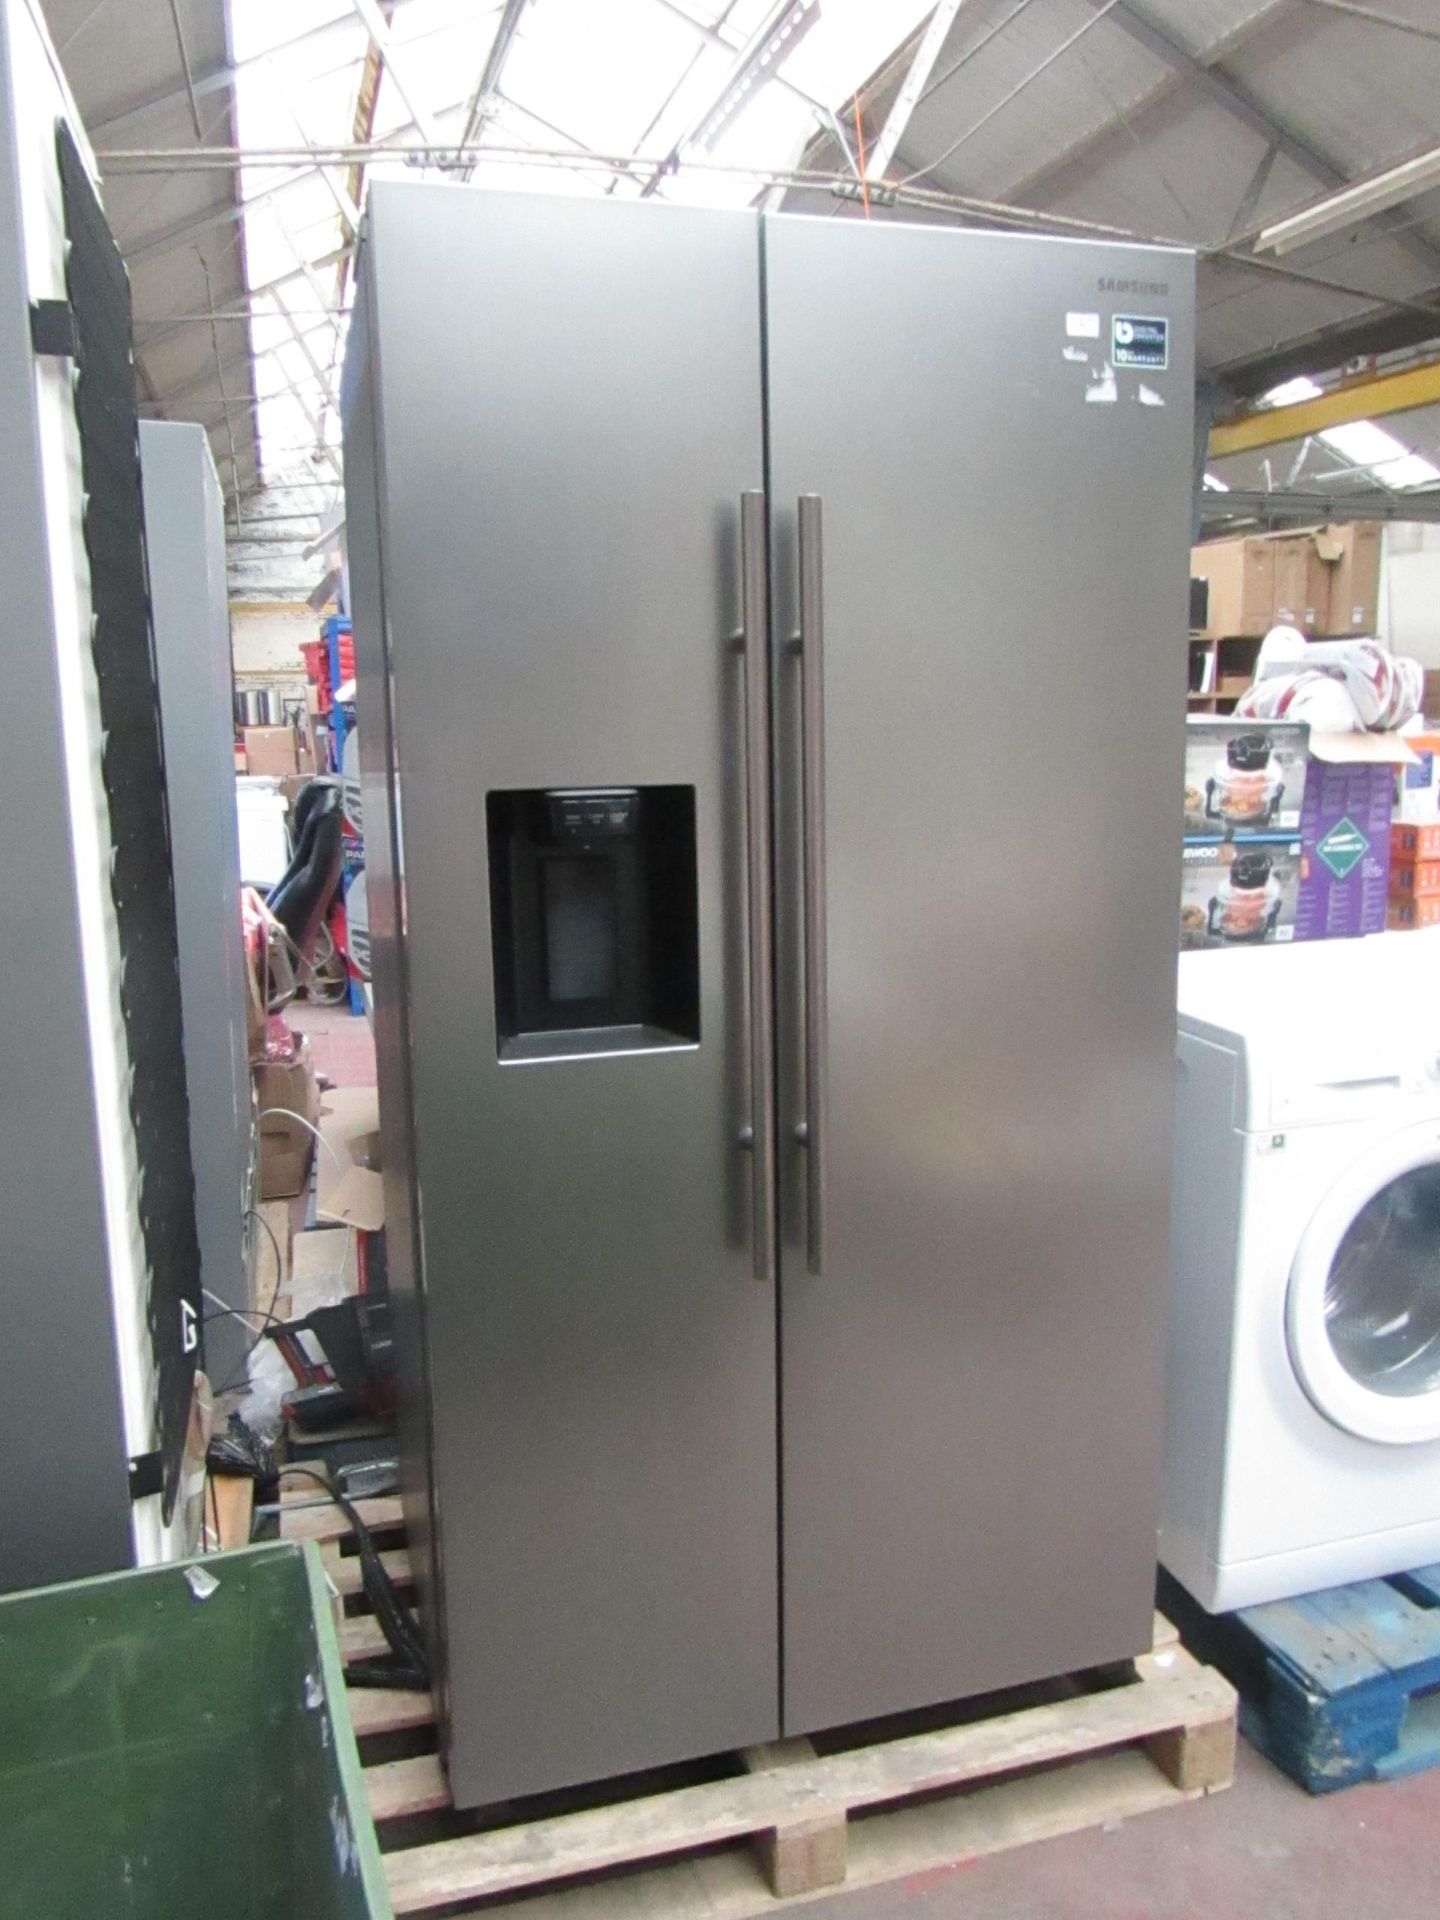 Samsung amerian style fridge freezer,RRP £1200,powers on and works,slight scratch on door